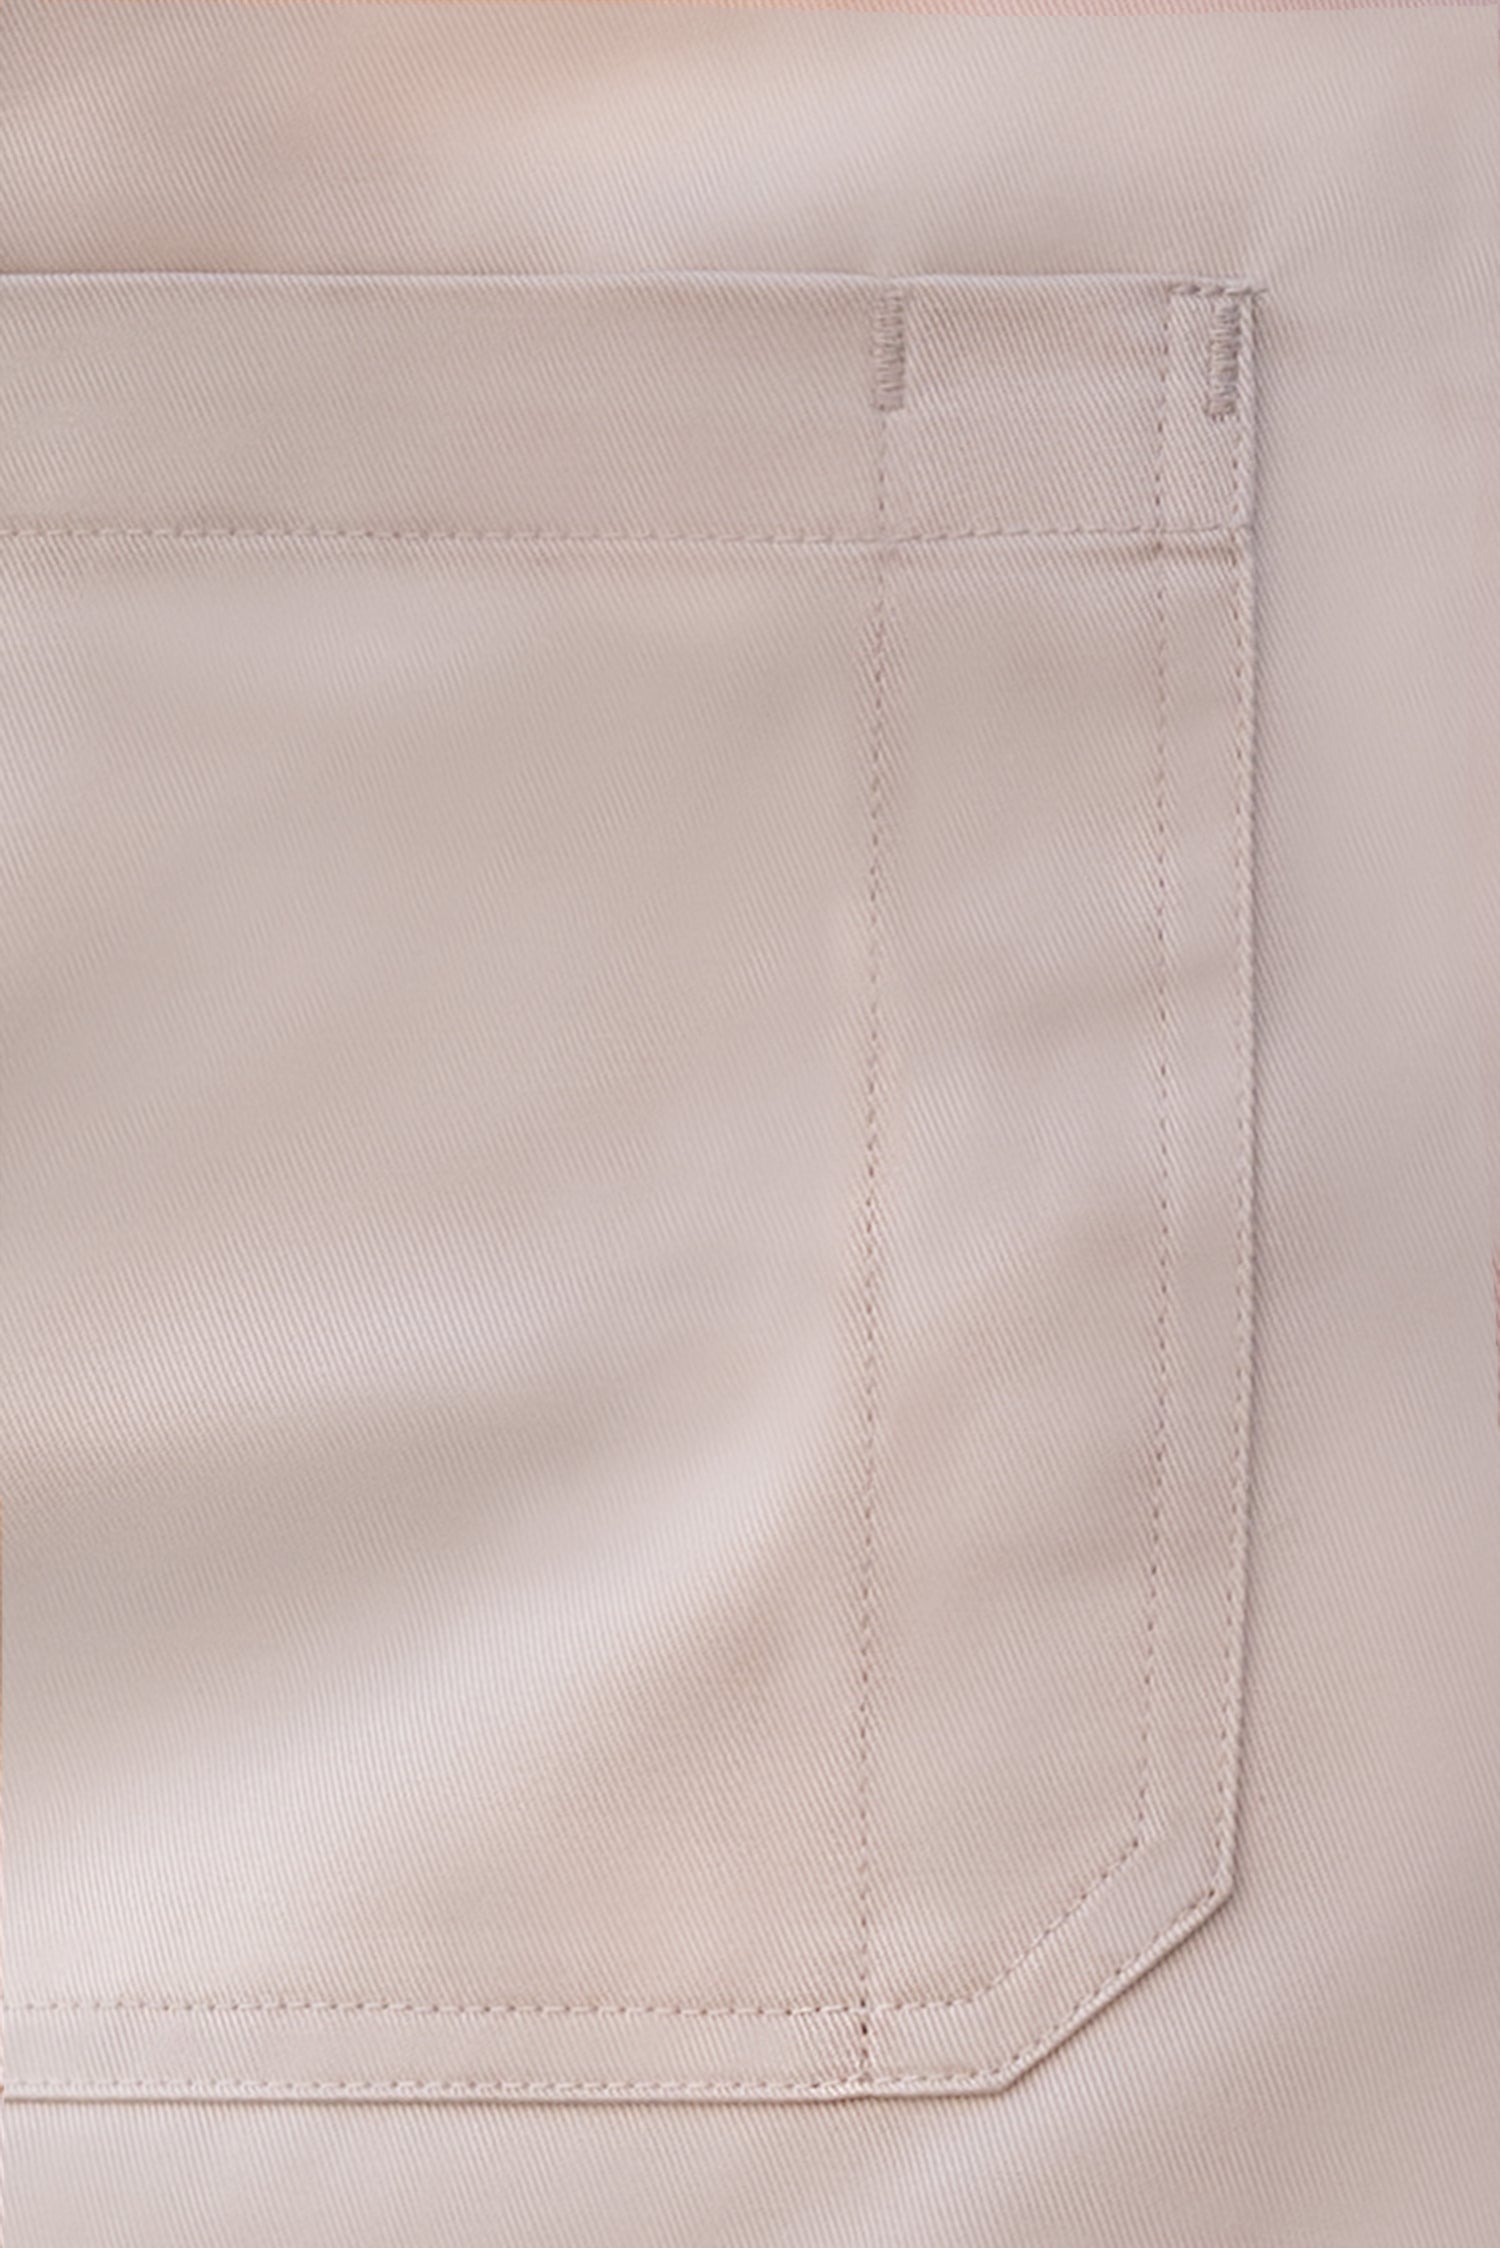 Bib apron close up pocket, stitch reinforcement